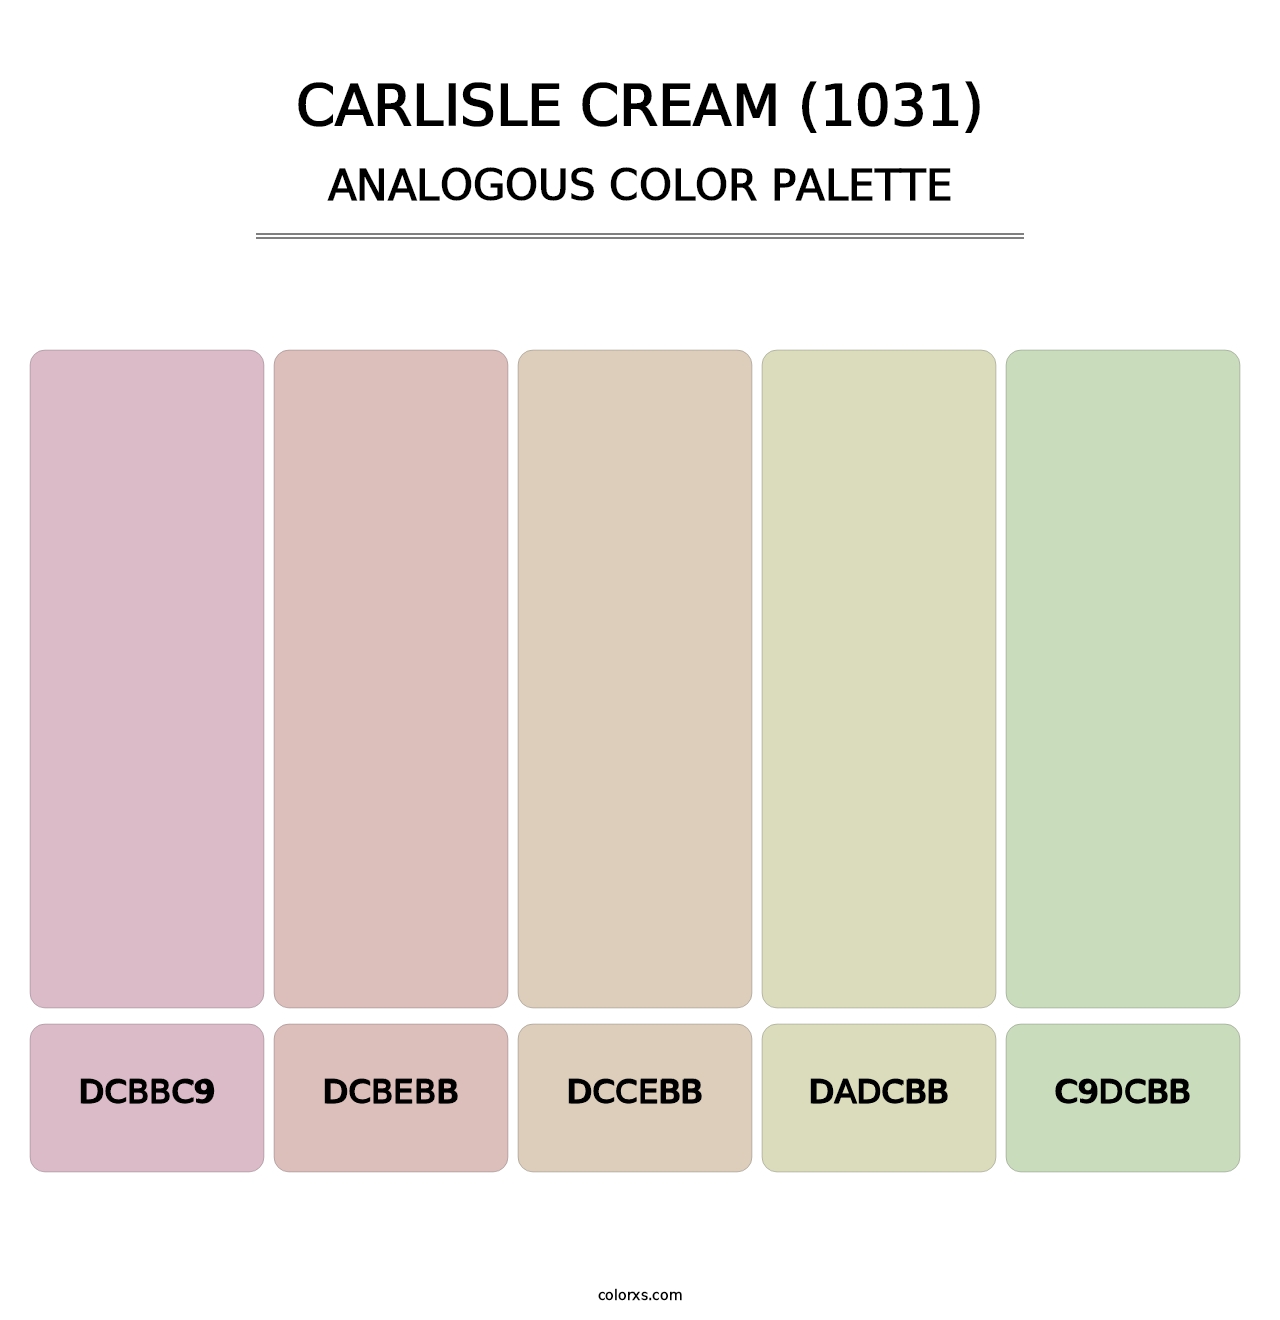 Carlisle Cream (1031) - Analogous Color Palette